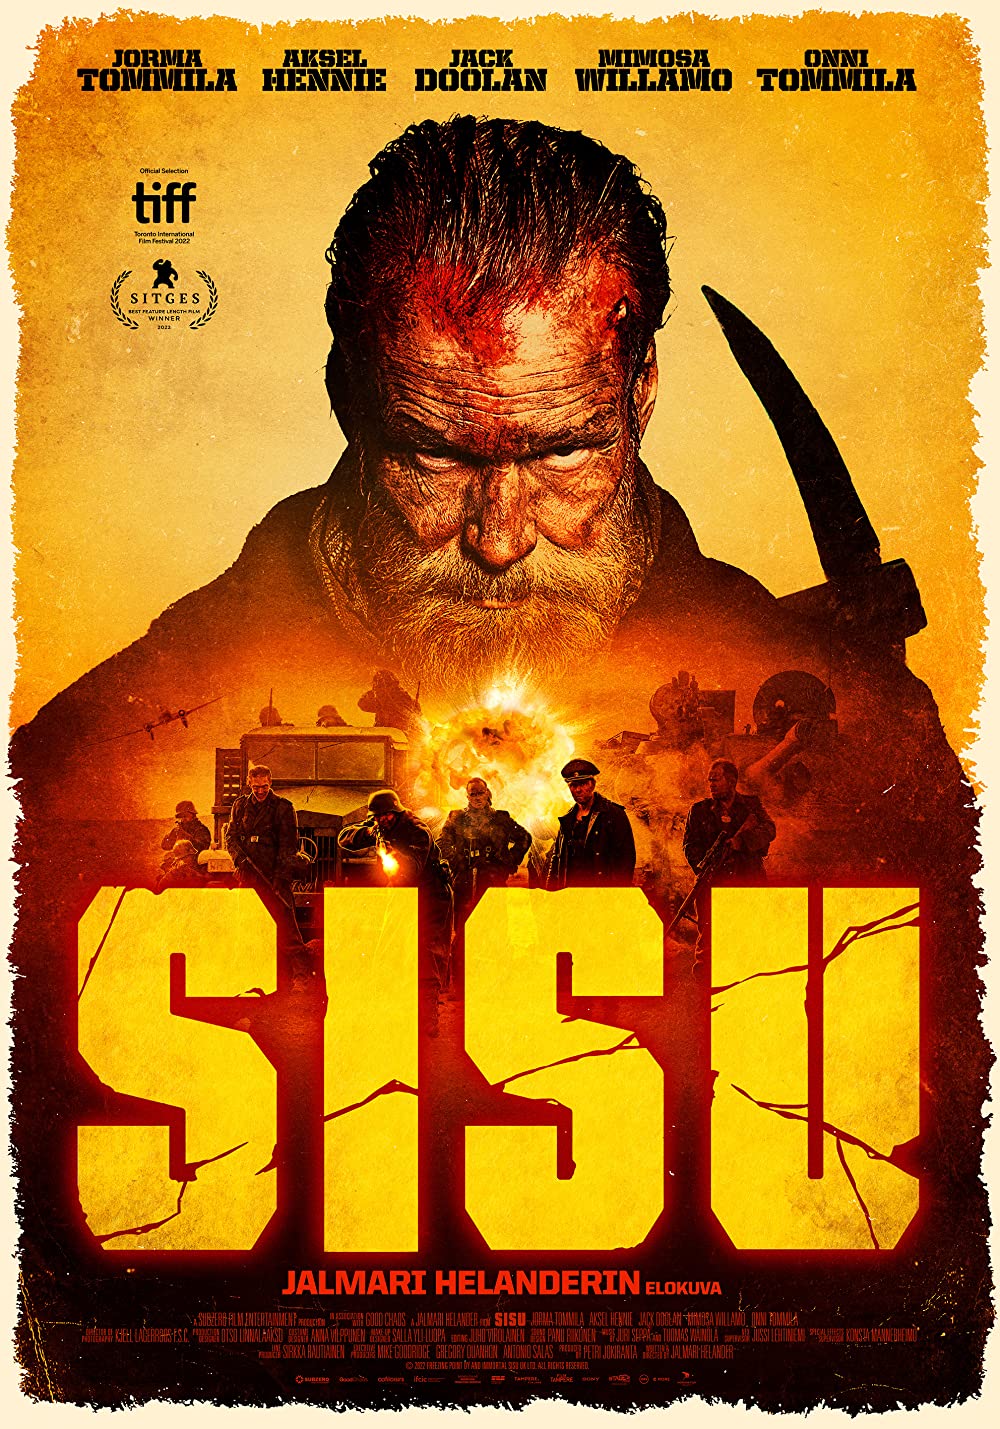 Sisu (2022) DVD Release Date